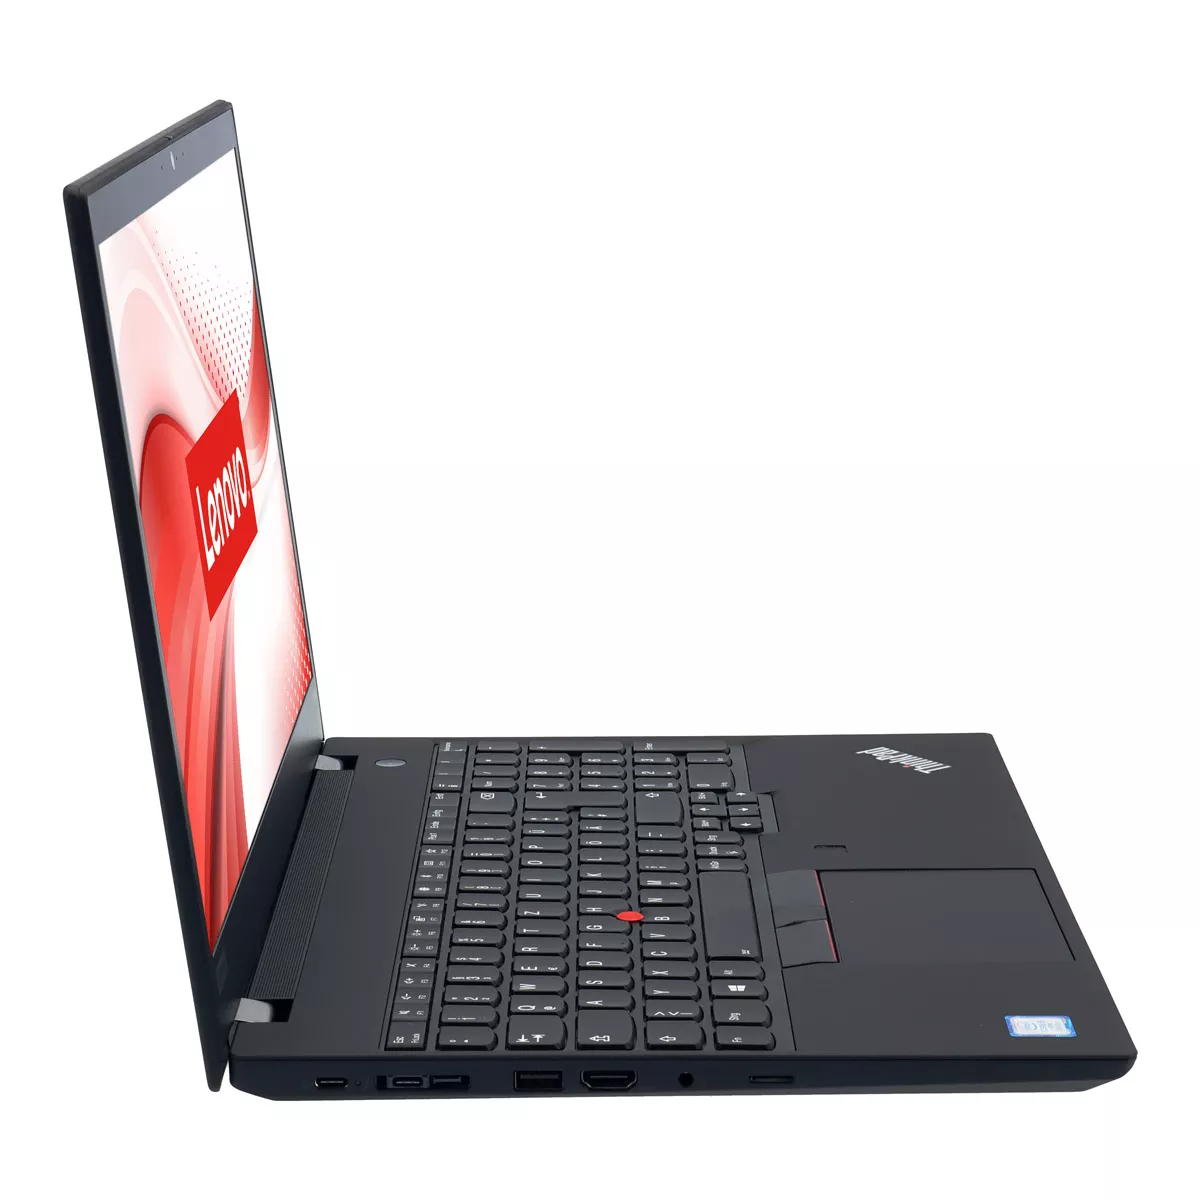 Lenovo ThinkPad T590 Core i7 8665U Full-HD Touch 16 GB 500 GB M.2 nVME SSD Webcam A+